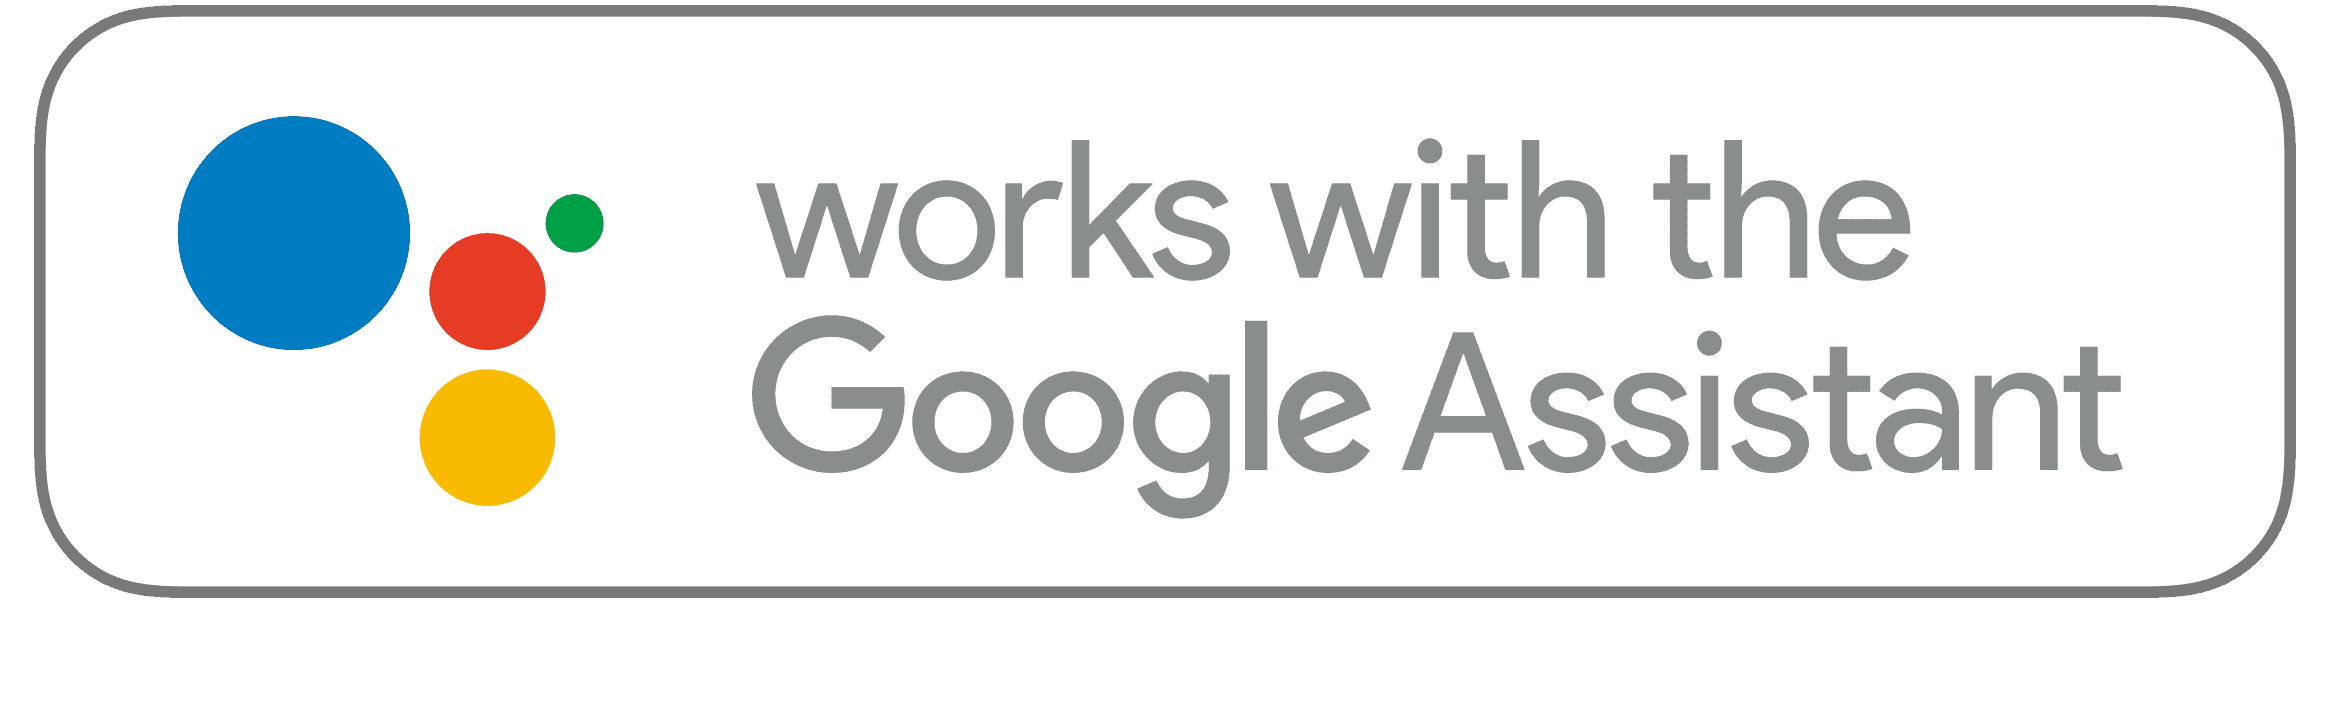 google-assistant-banner.png